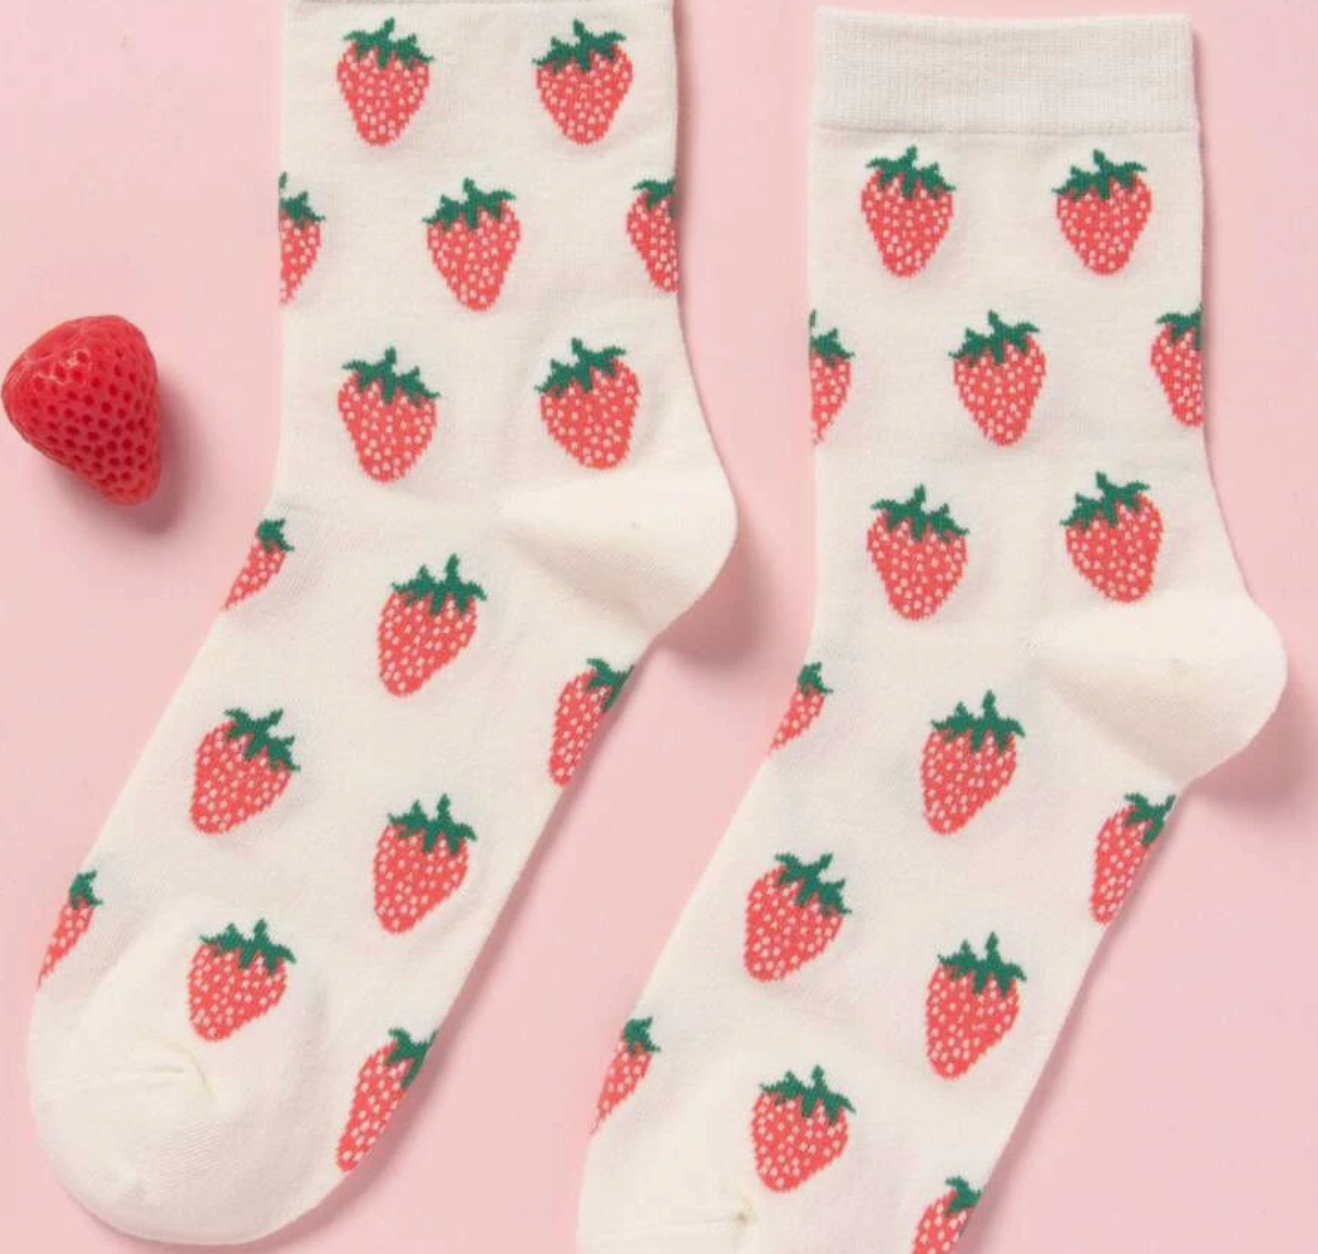 Strawberry patterned crew socks